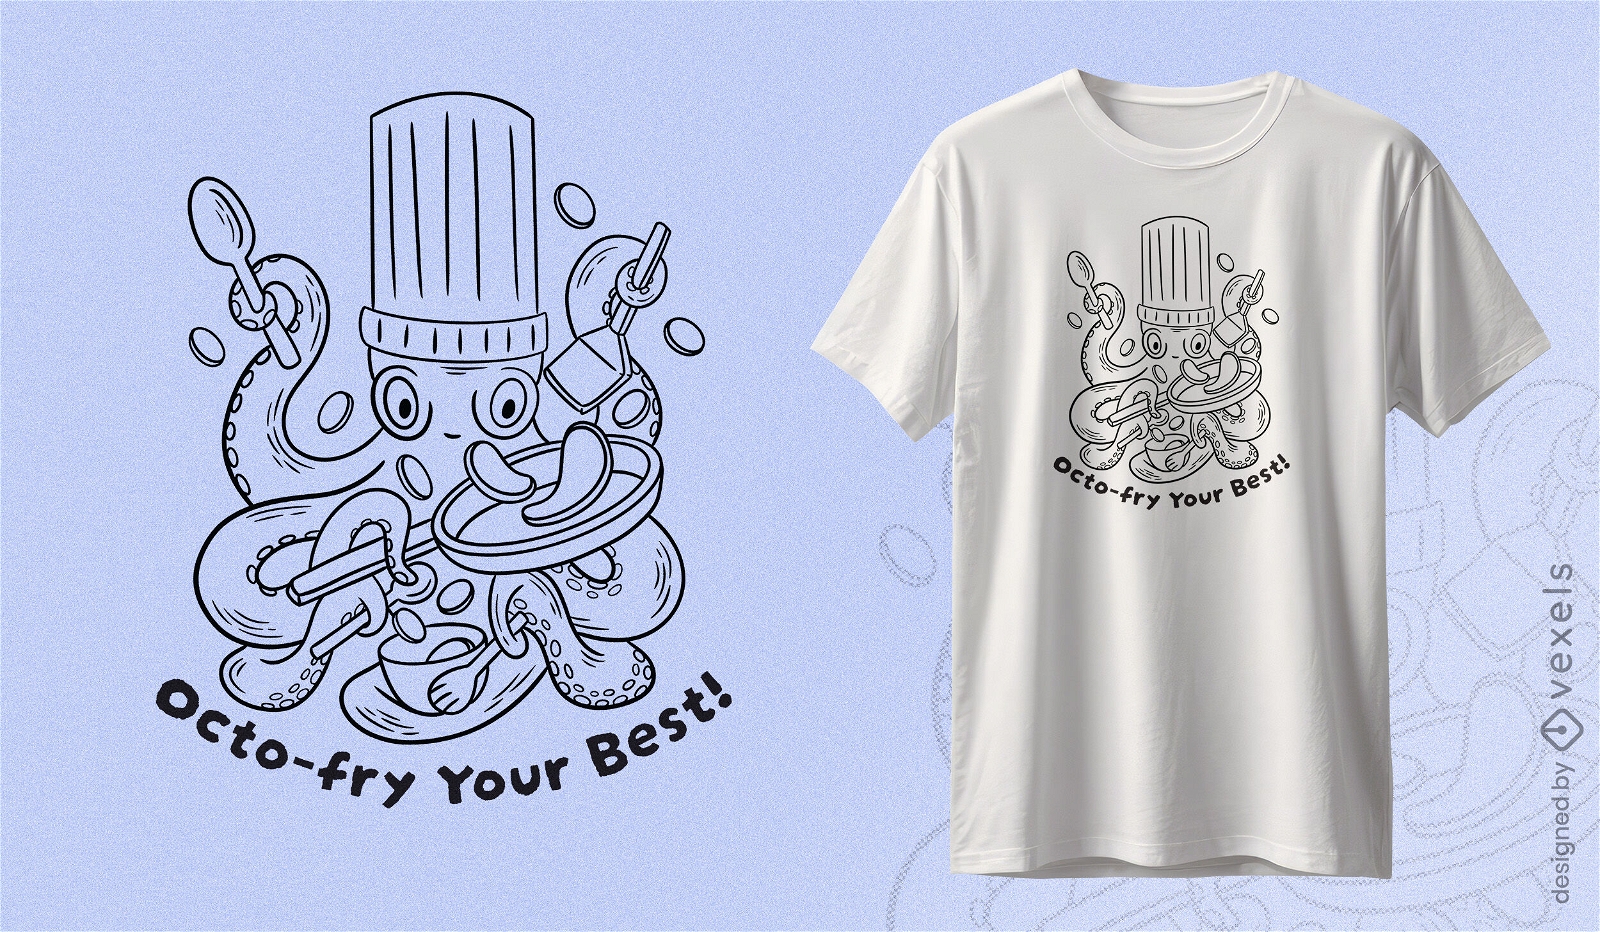 Chef octopus encouragement t-shirt design